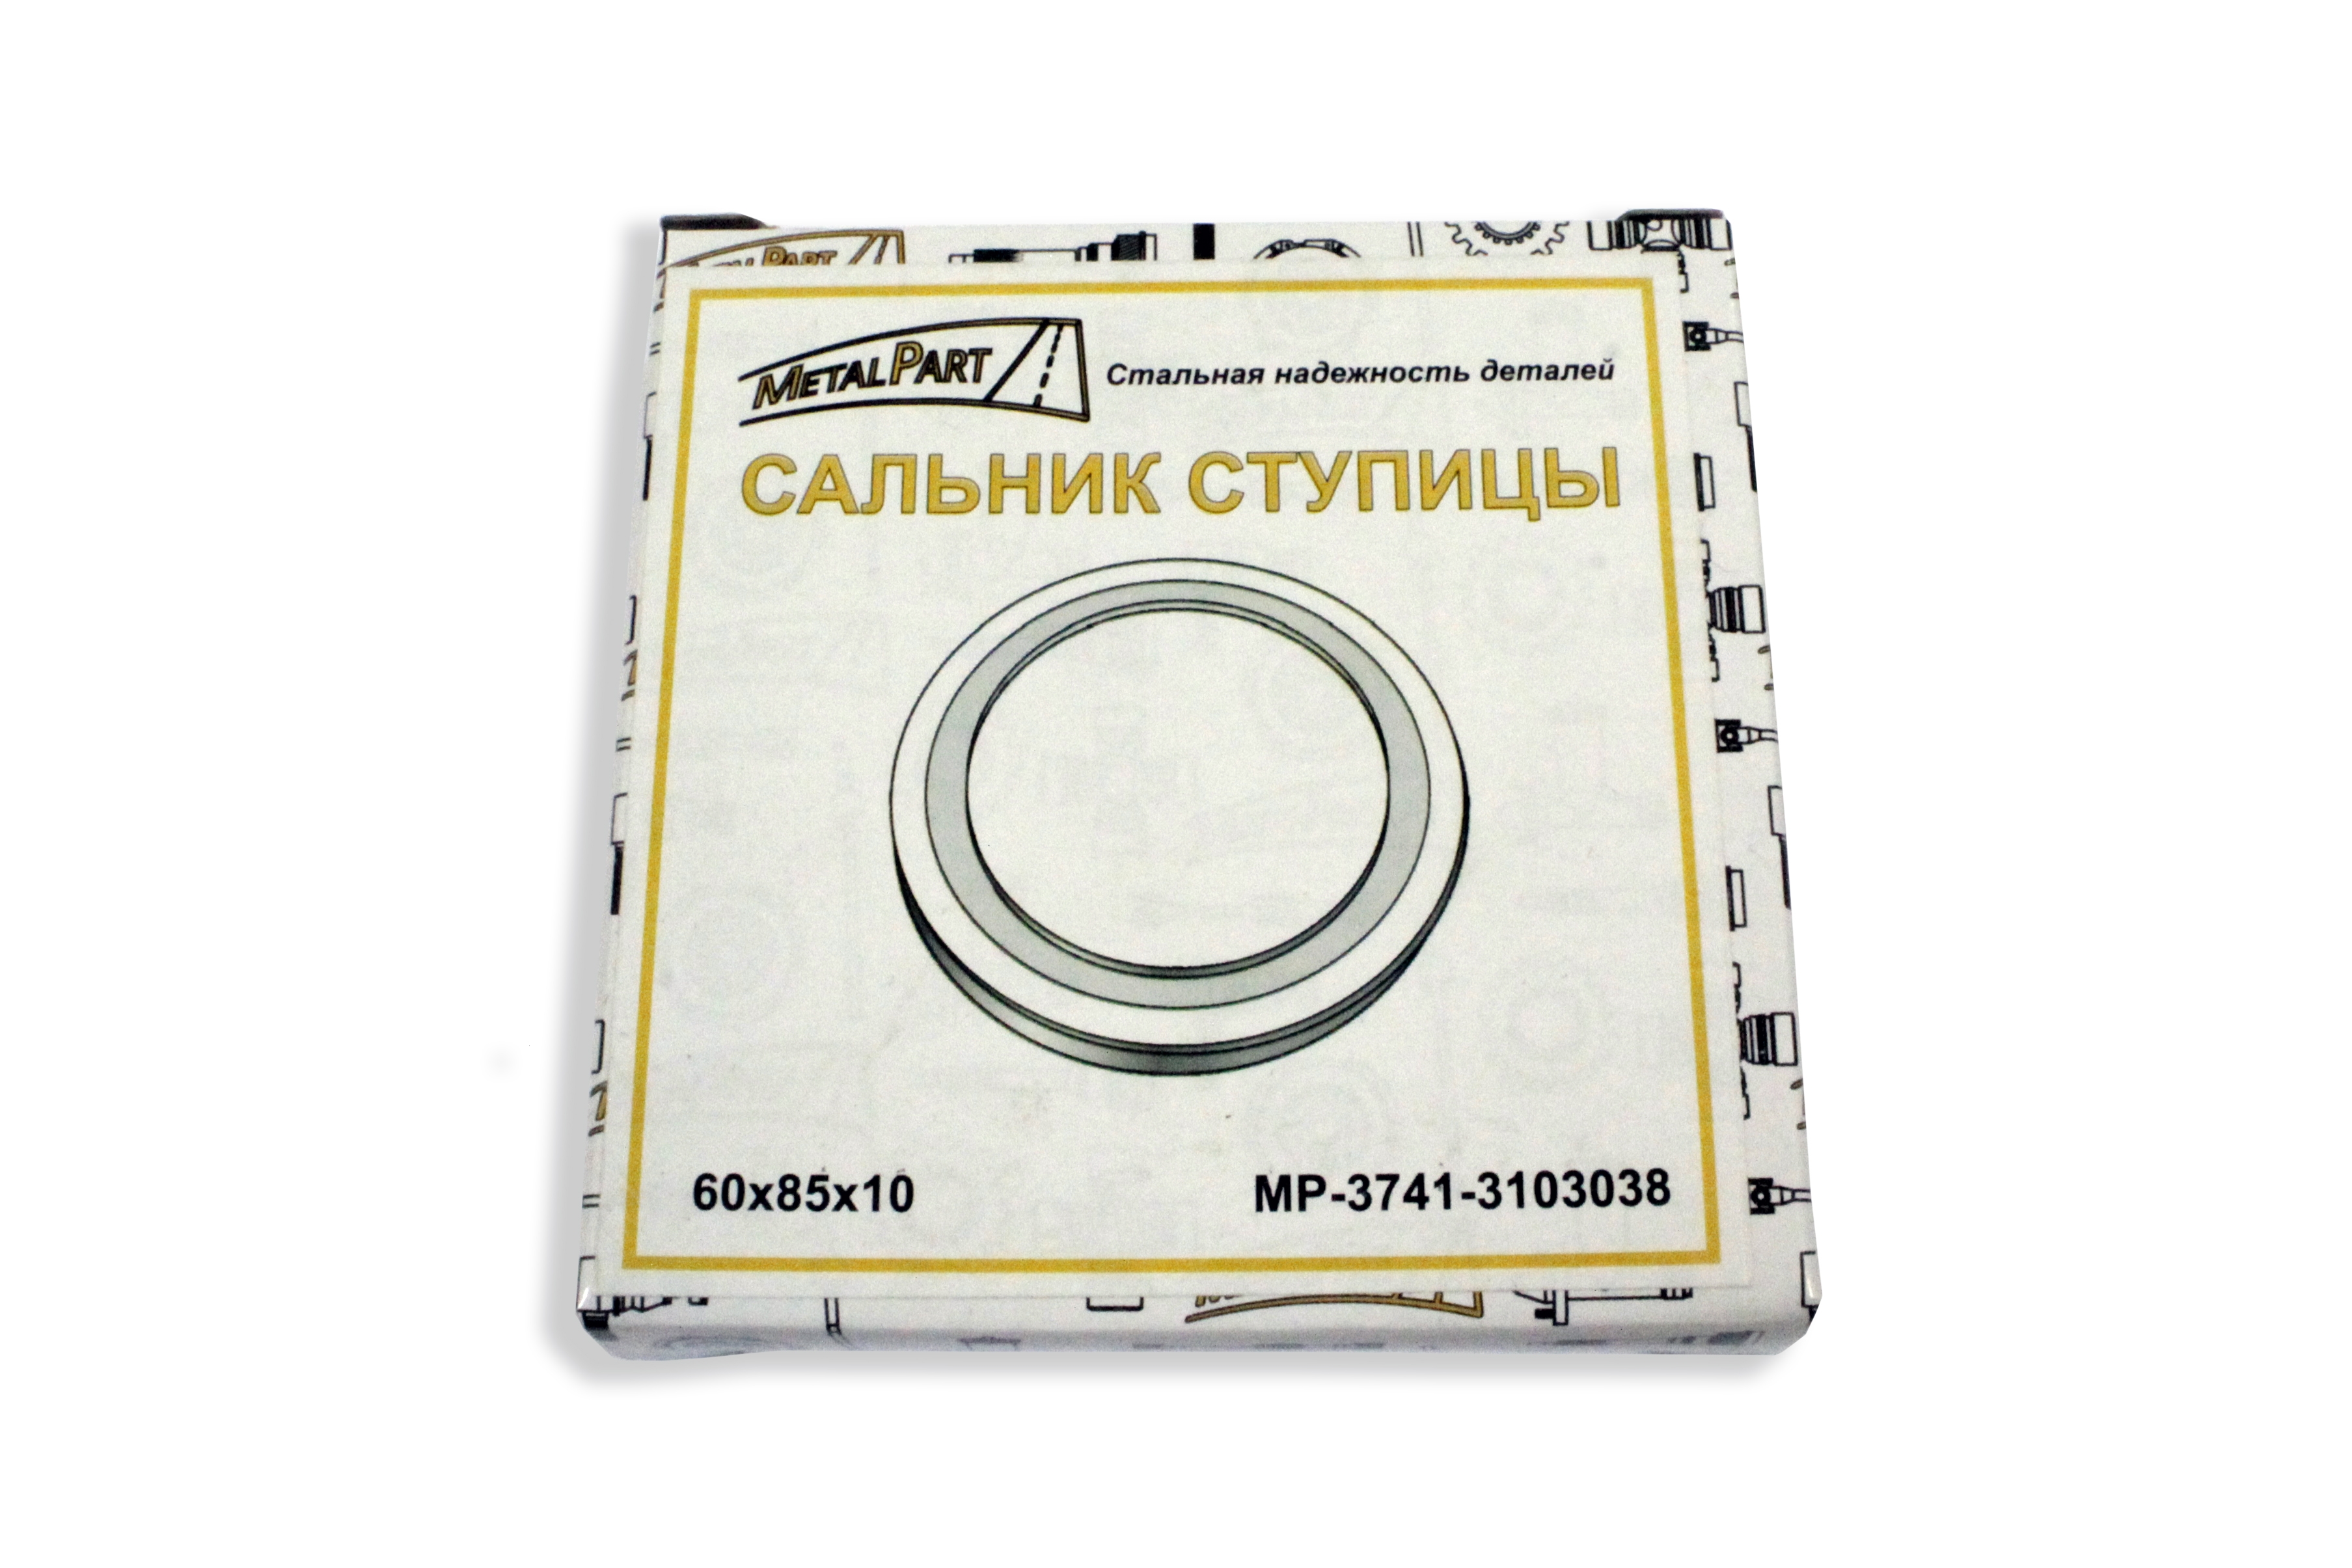 Сальник ступицы MetalPart для автомобилей УАЗ без ABS. 60х85х10. Материал NBR.